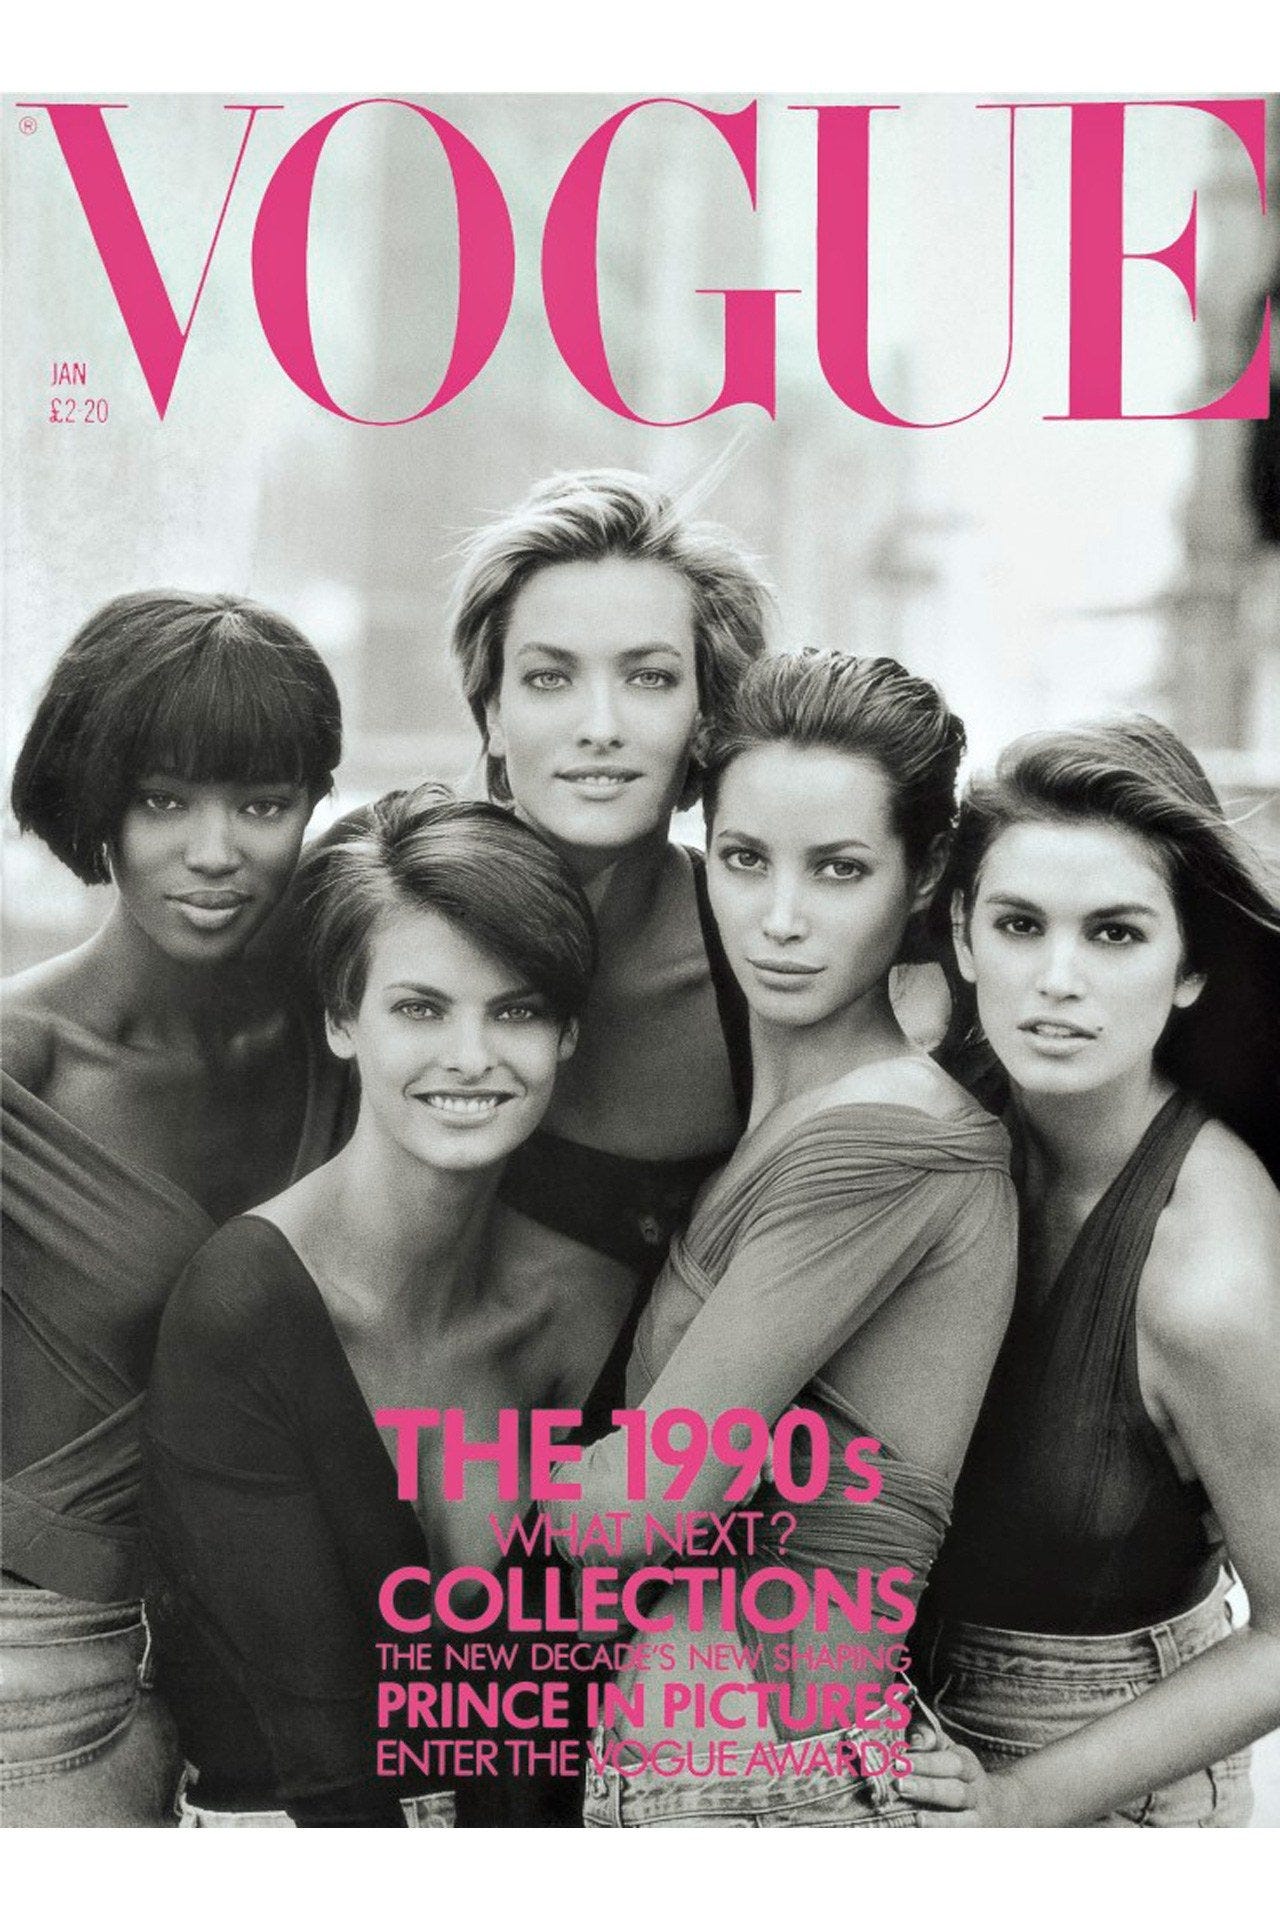 Gianni Versace biography, British Vogue